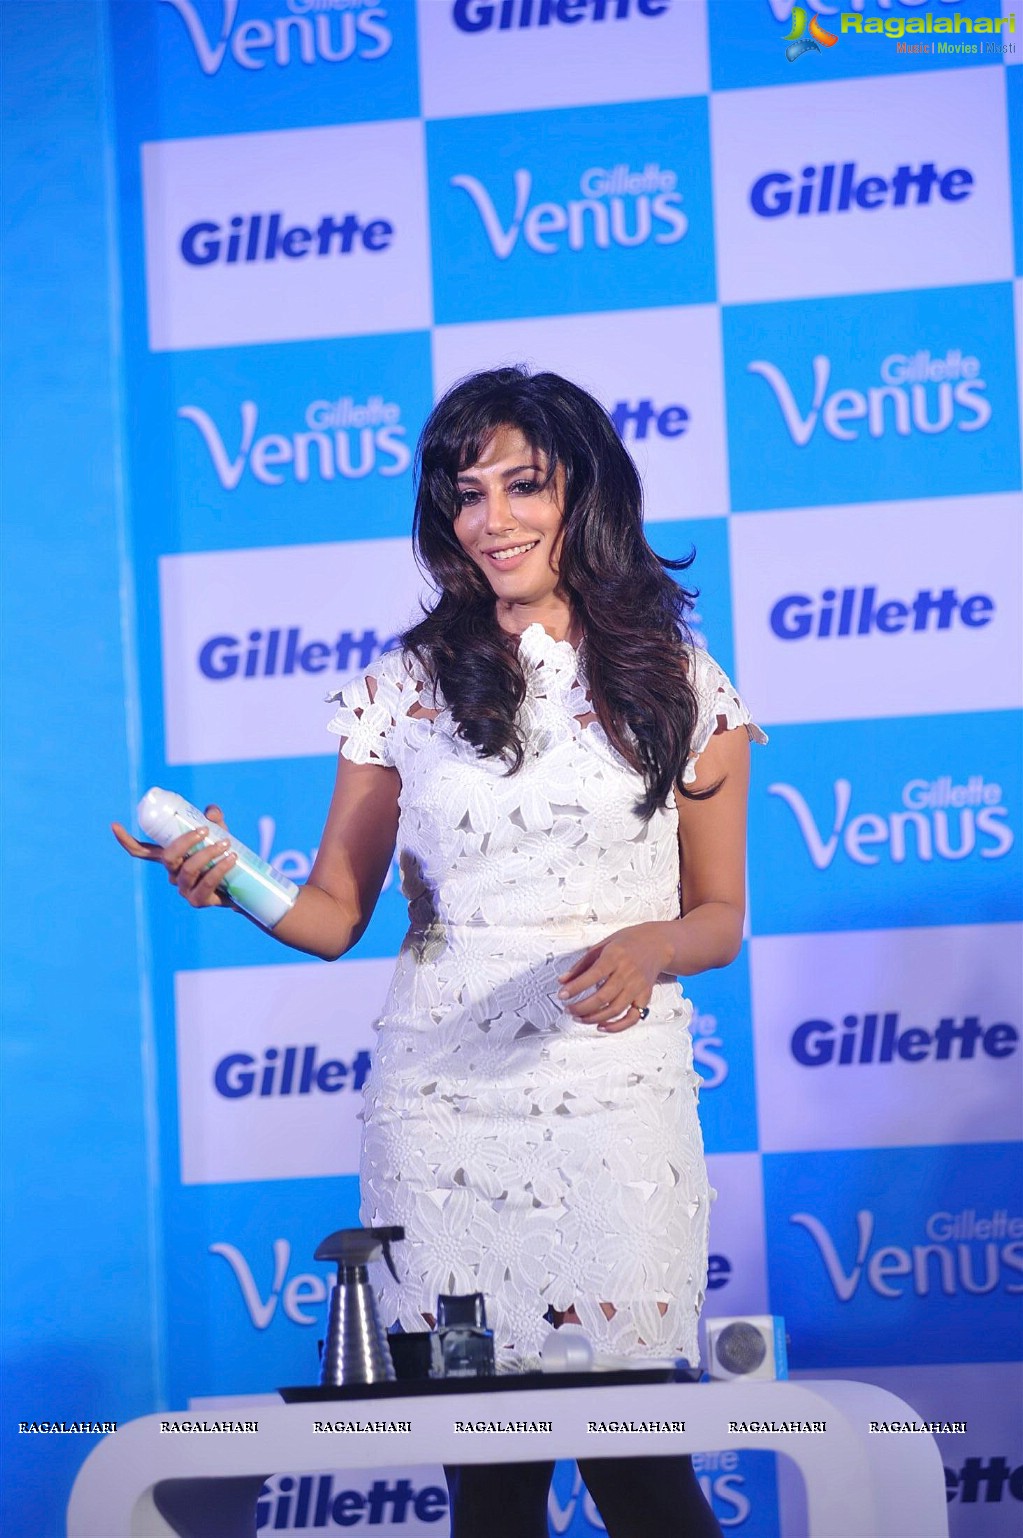 Gillette Venus Satin Care Shave Gel Launch